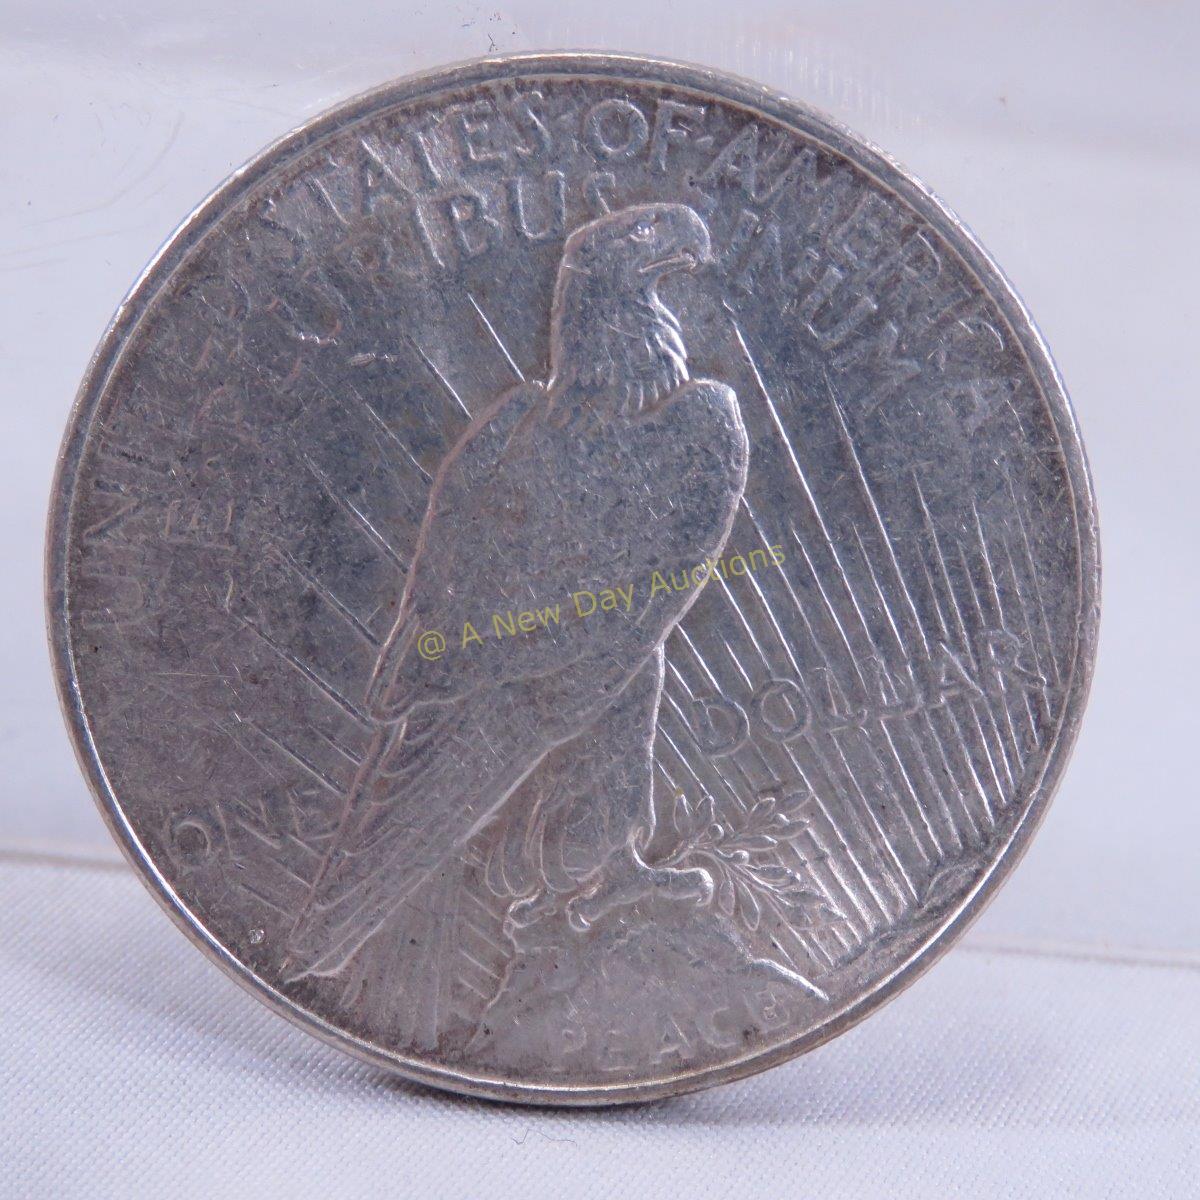 1922 P,D,S Peace Silver Dollars